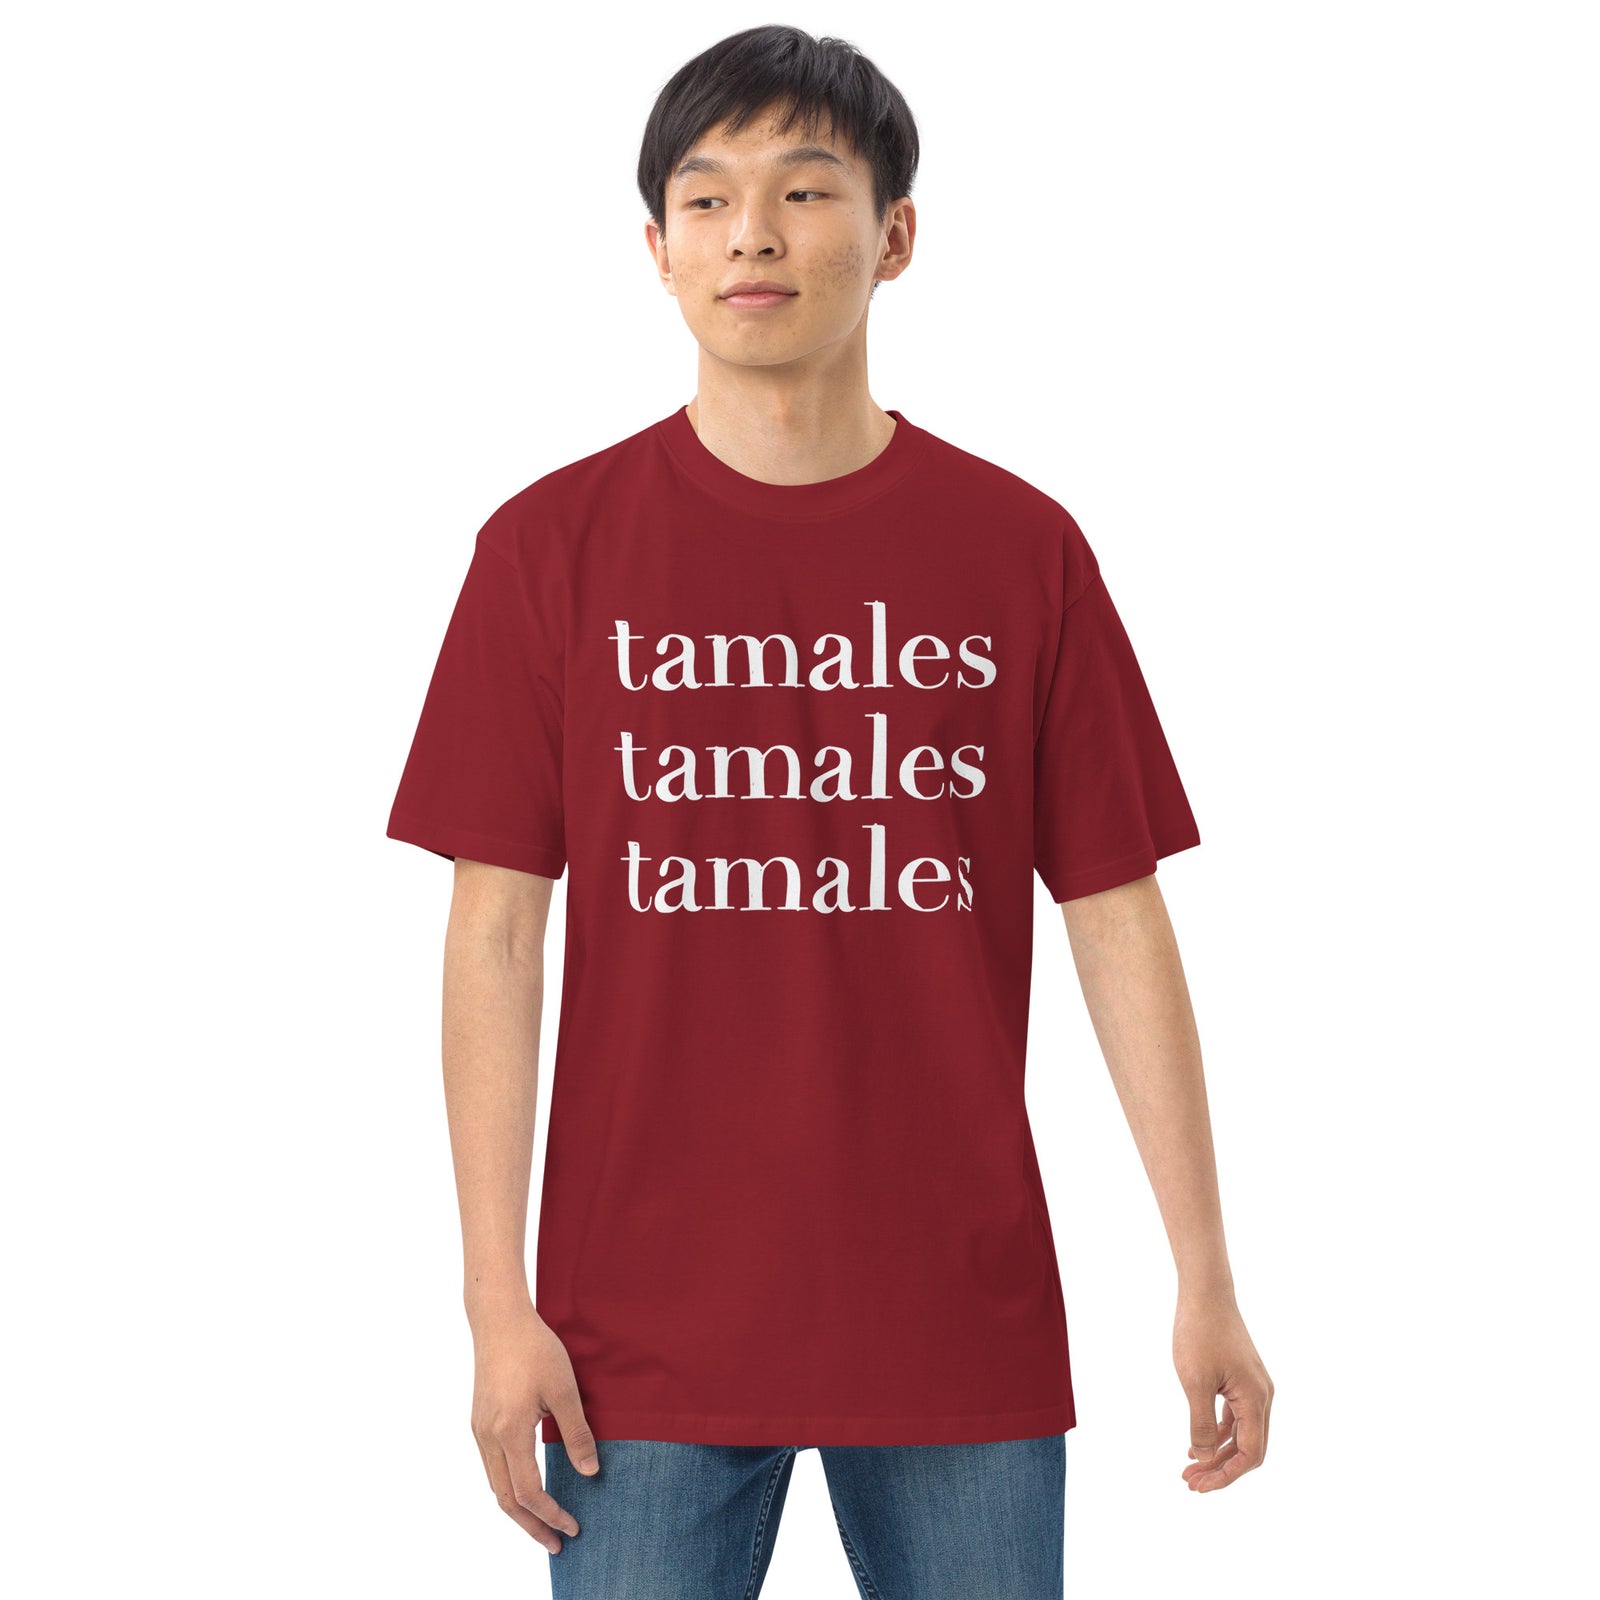 TAMALES TAMALES TAMALES - Men’s premium heavyweight tee